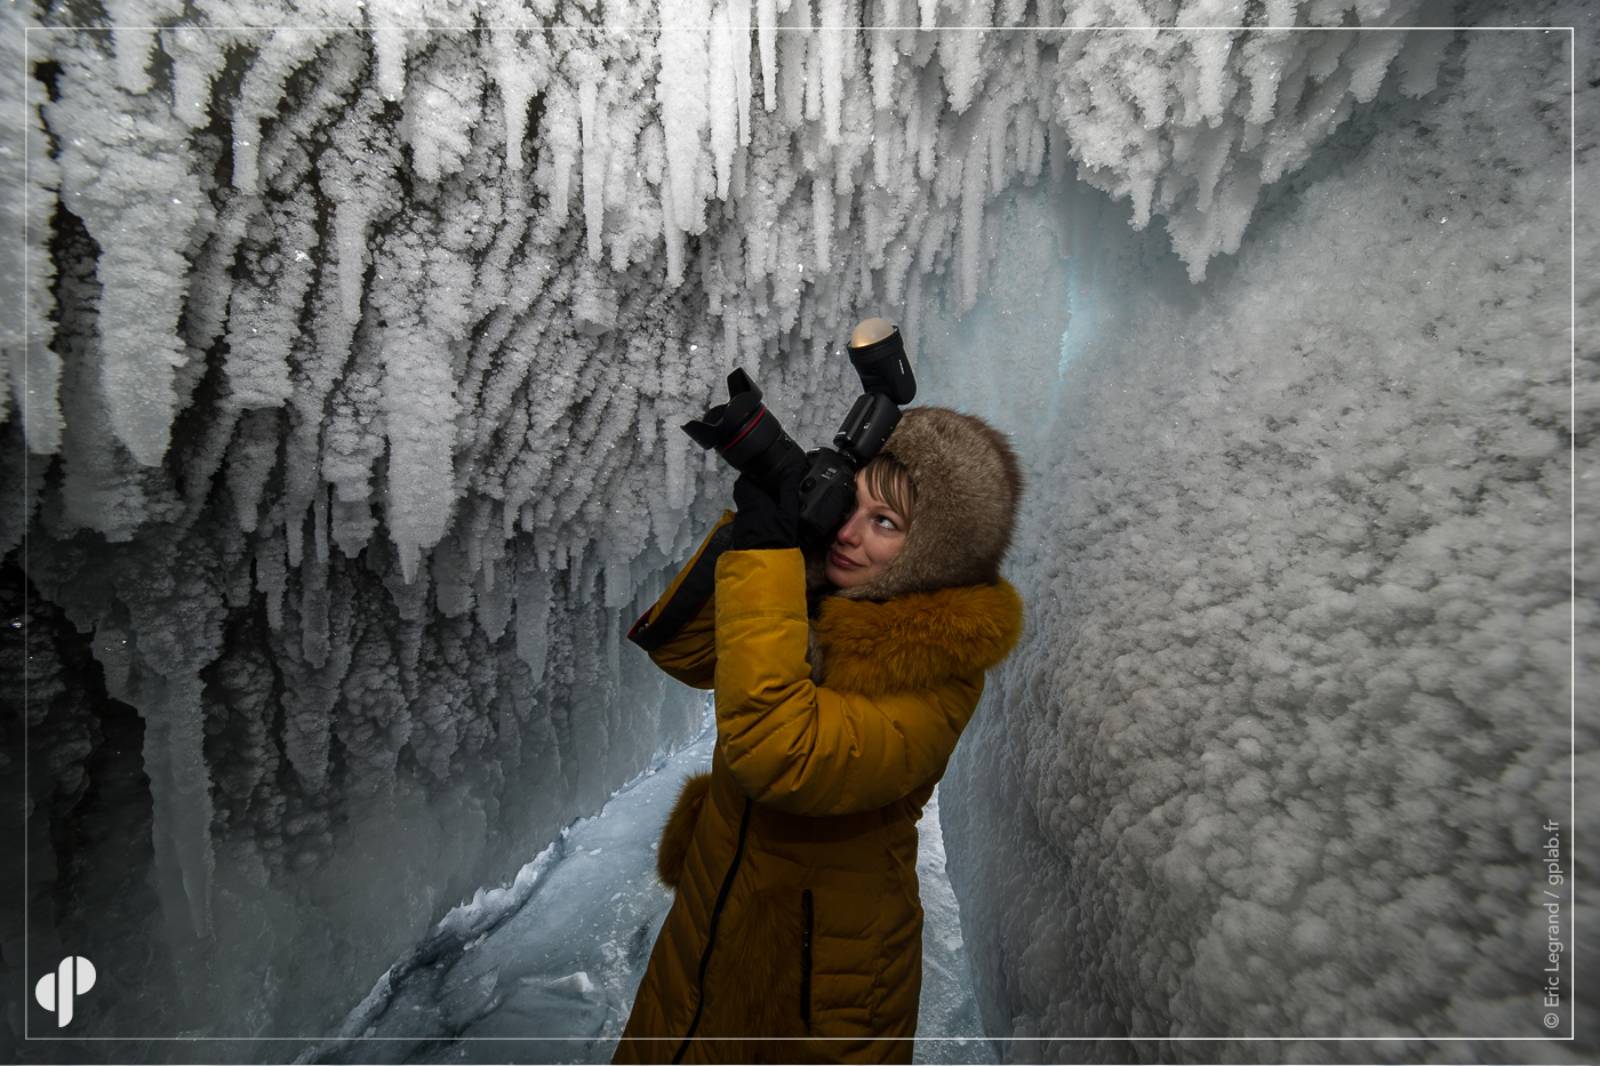 la photographe Natalya Saprunova dans un crevasse de glace